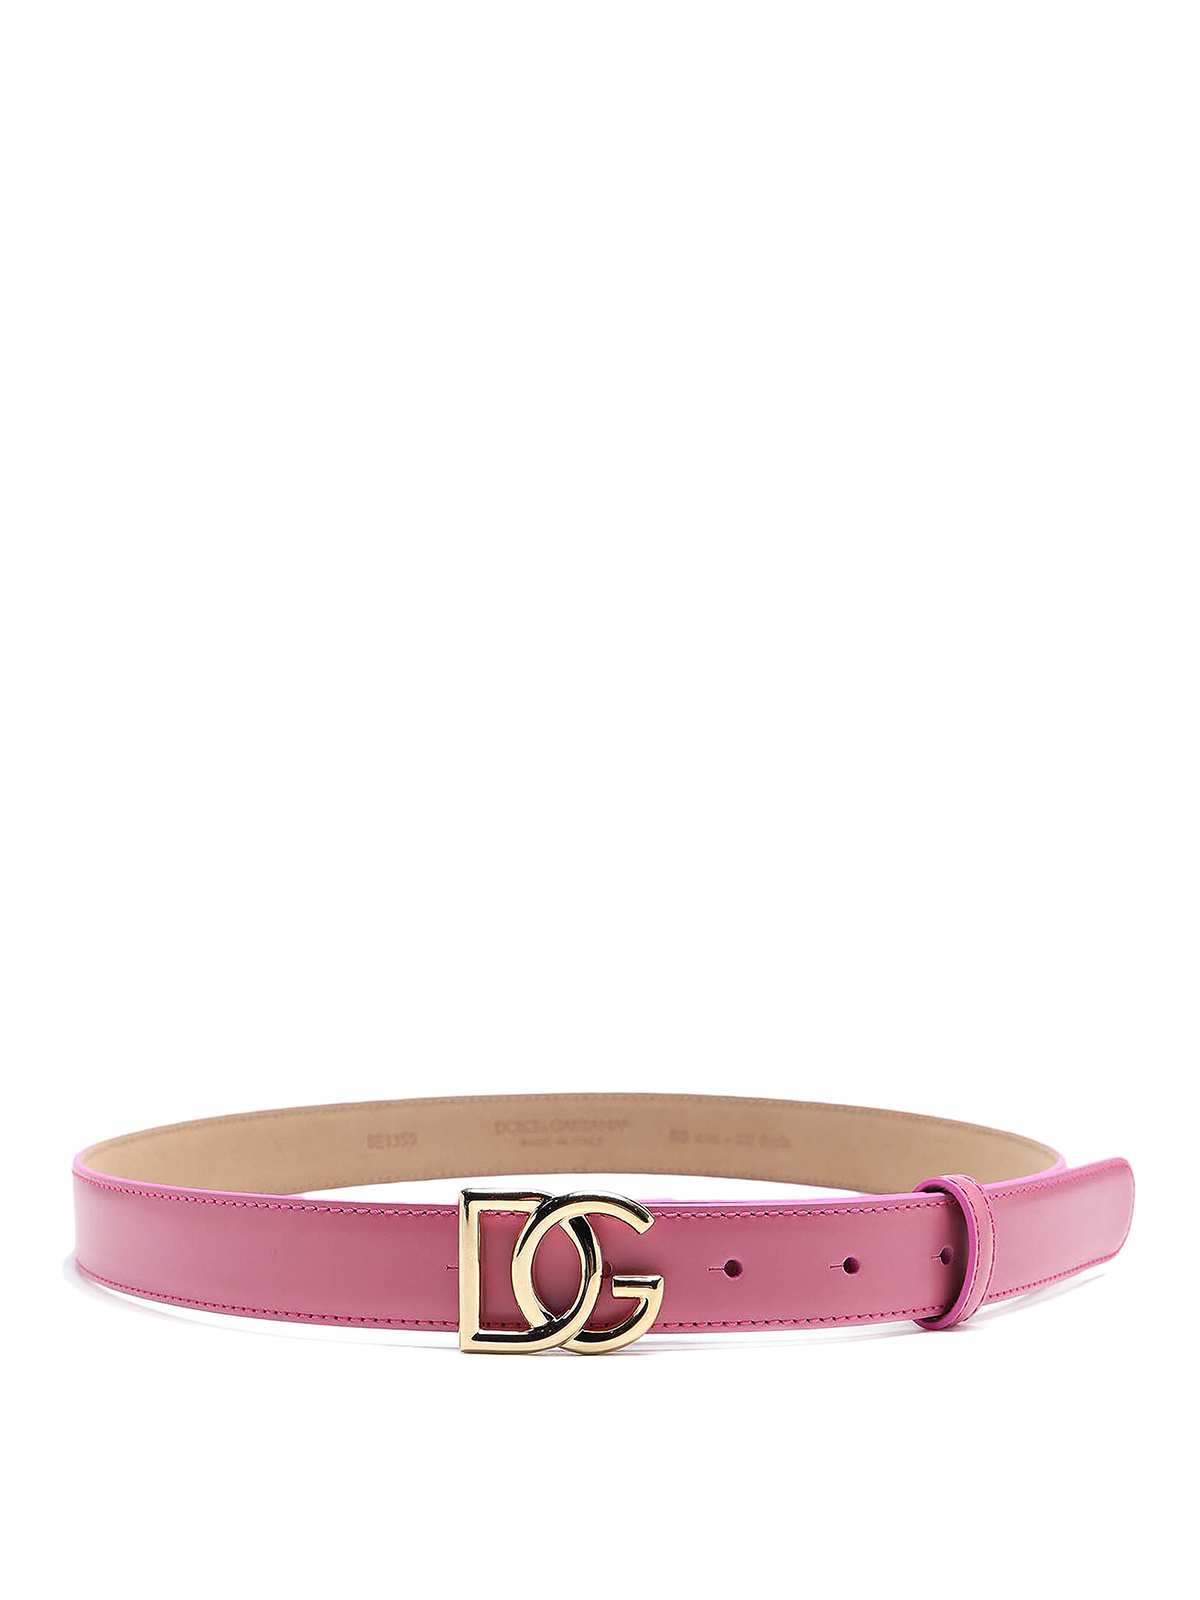 dolce and gabbana pink belt